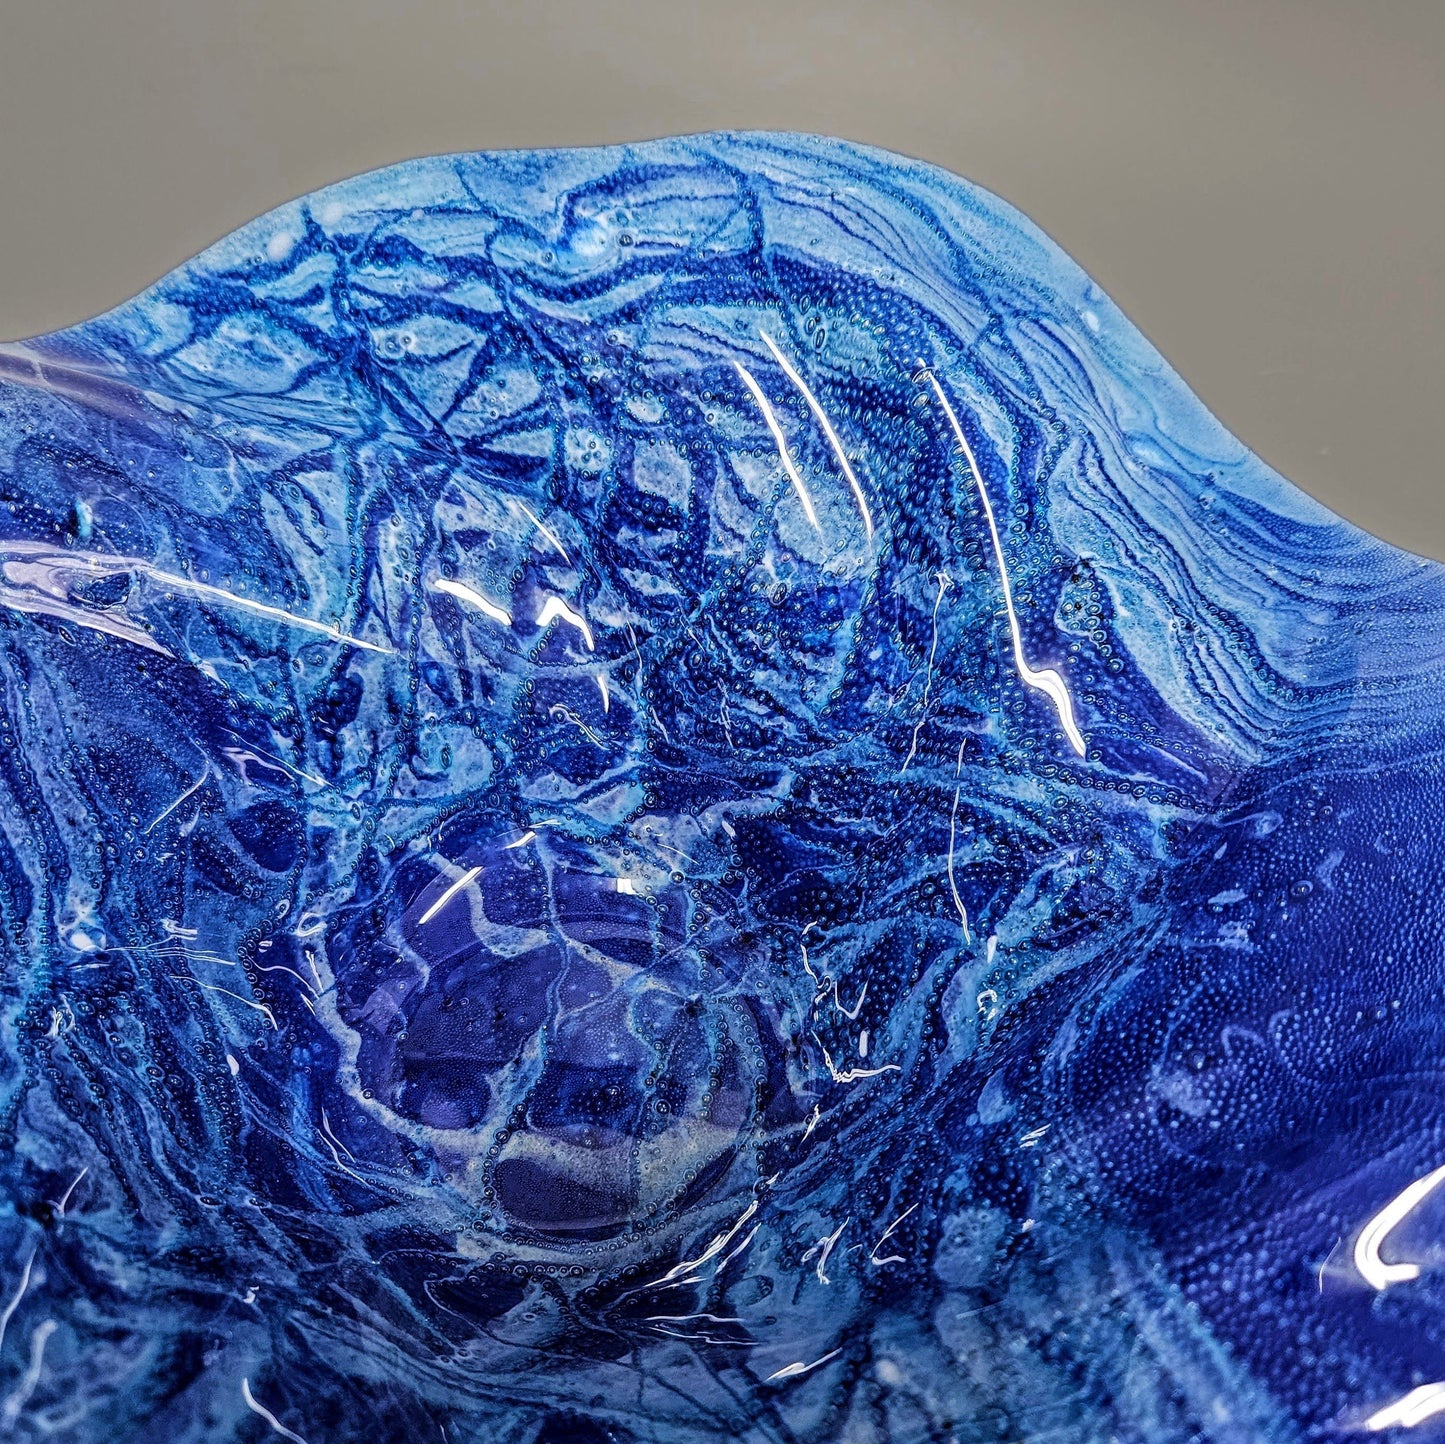 Glass Art Wave Bowl in Cobalt Turquoise Aqua